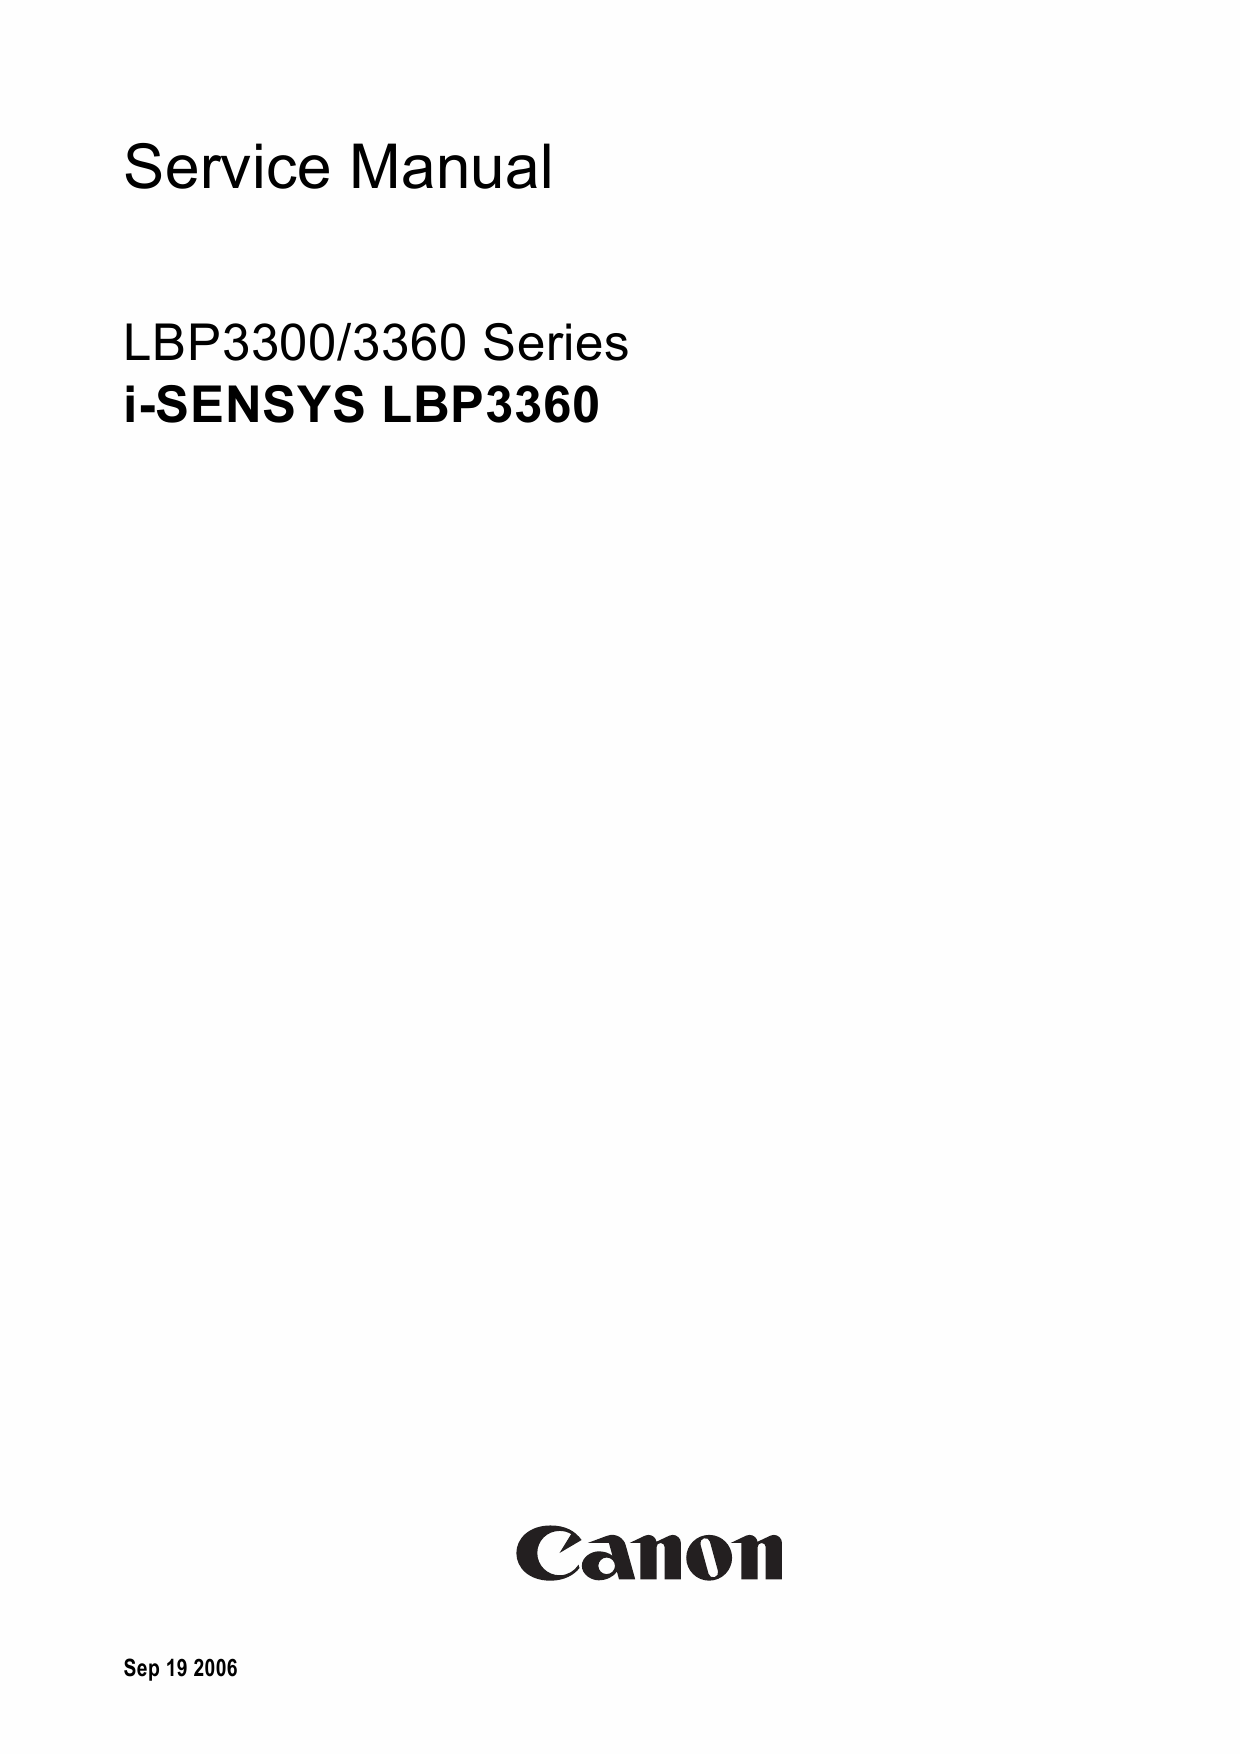 Canon imageCLASS LBP-3360 Service Manual-1